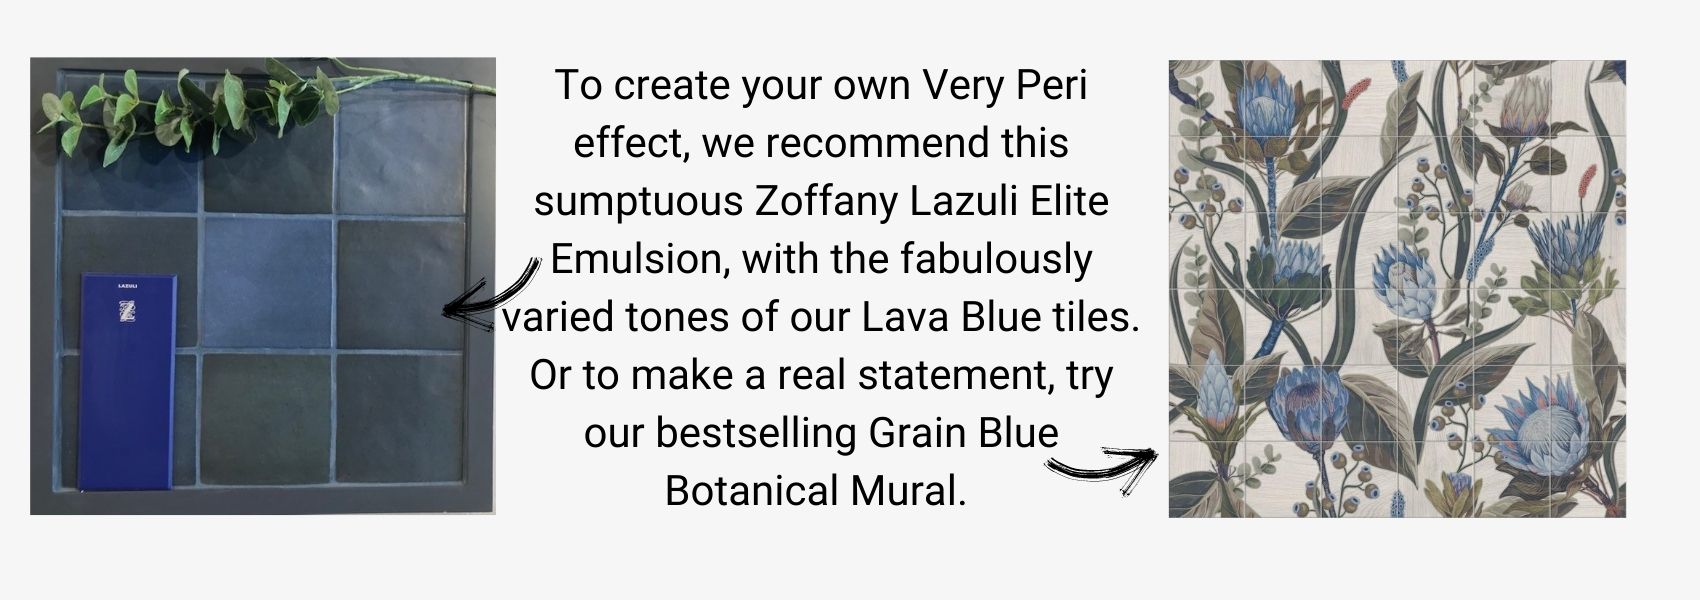 Tuscany Botanical Mural & Lava Blue